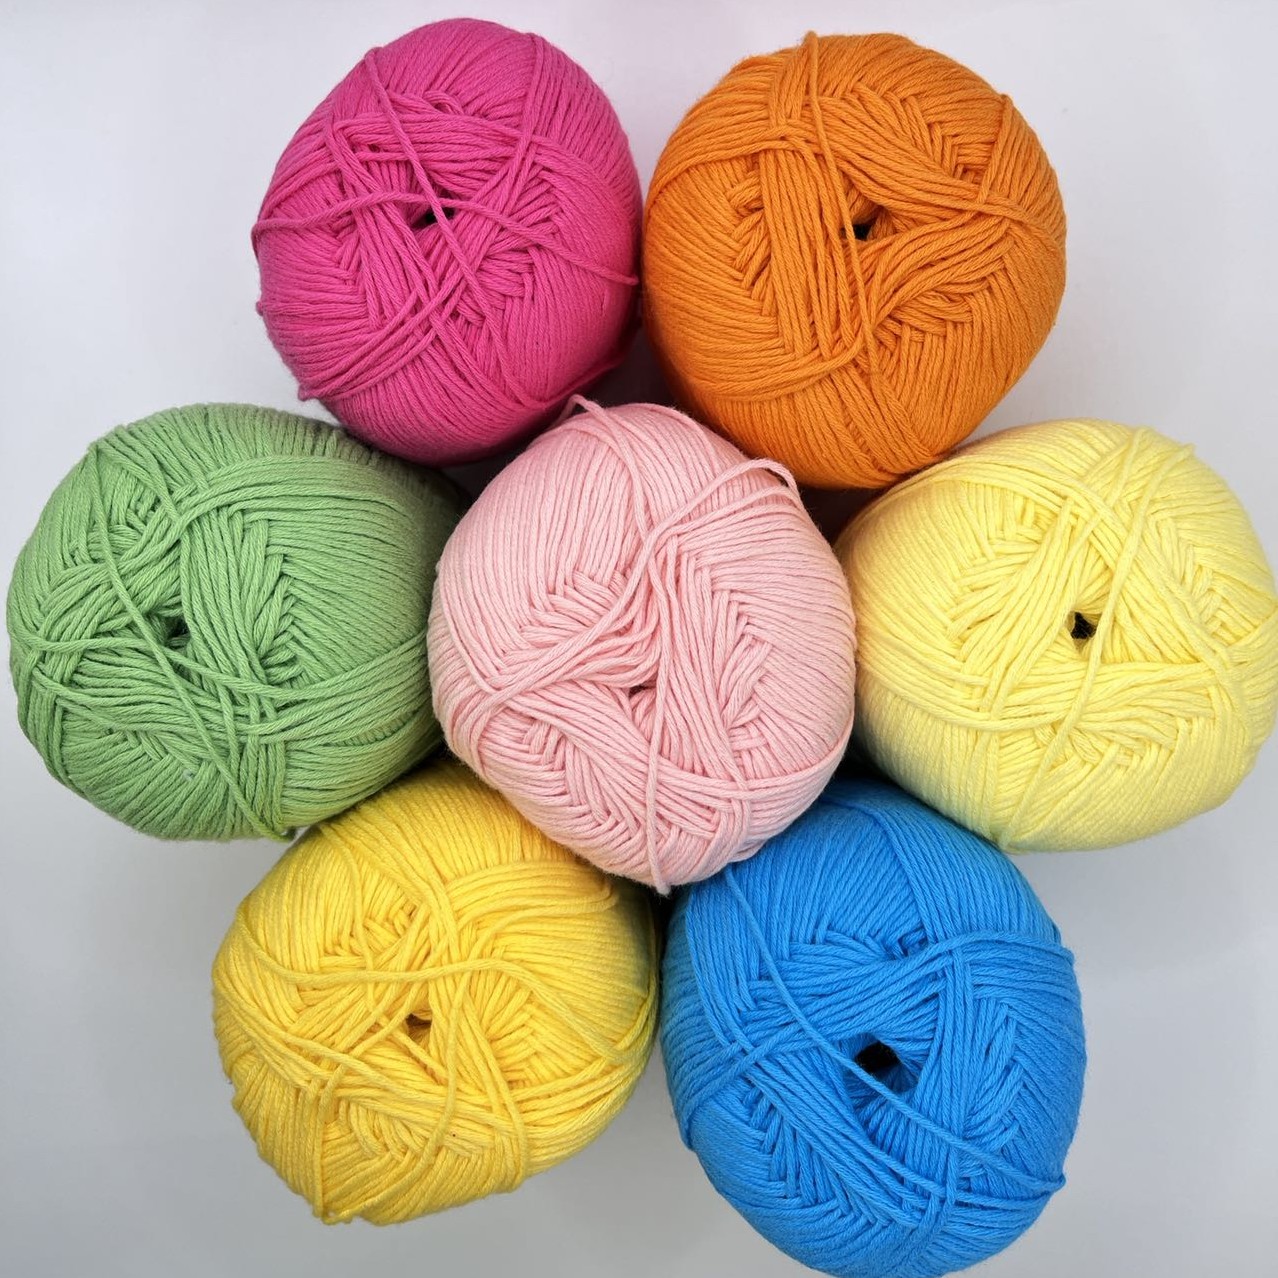 Best Quality 100% Cotton yarn dyed 4 ply Hand Knitting Yarn